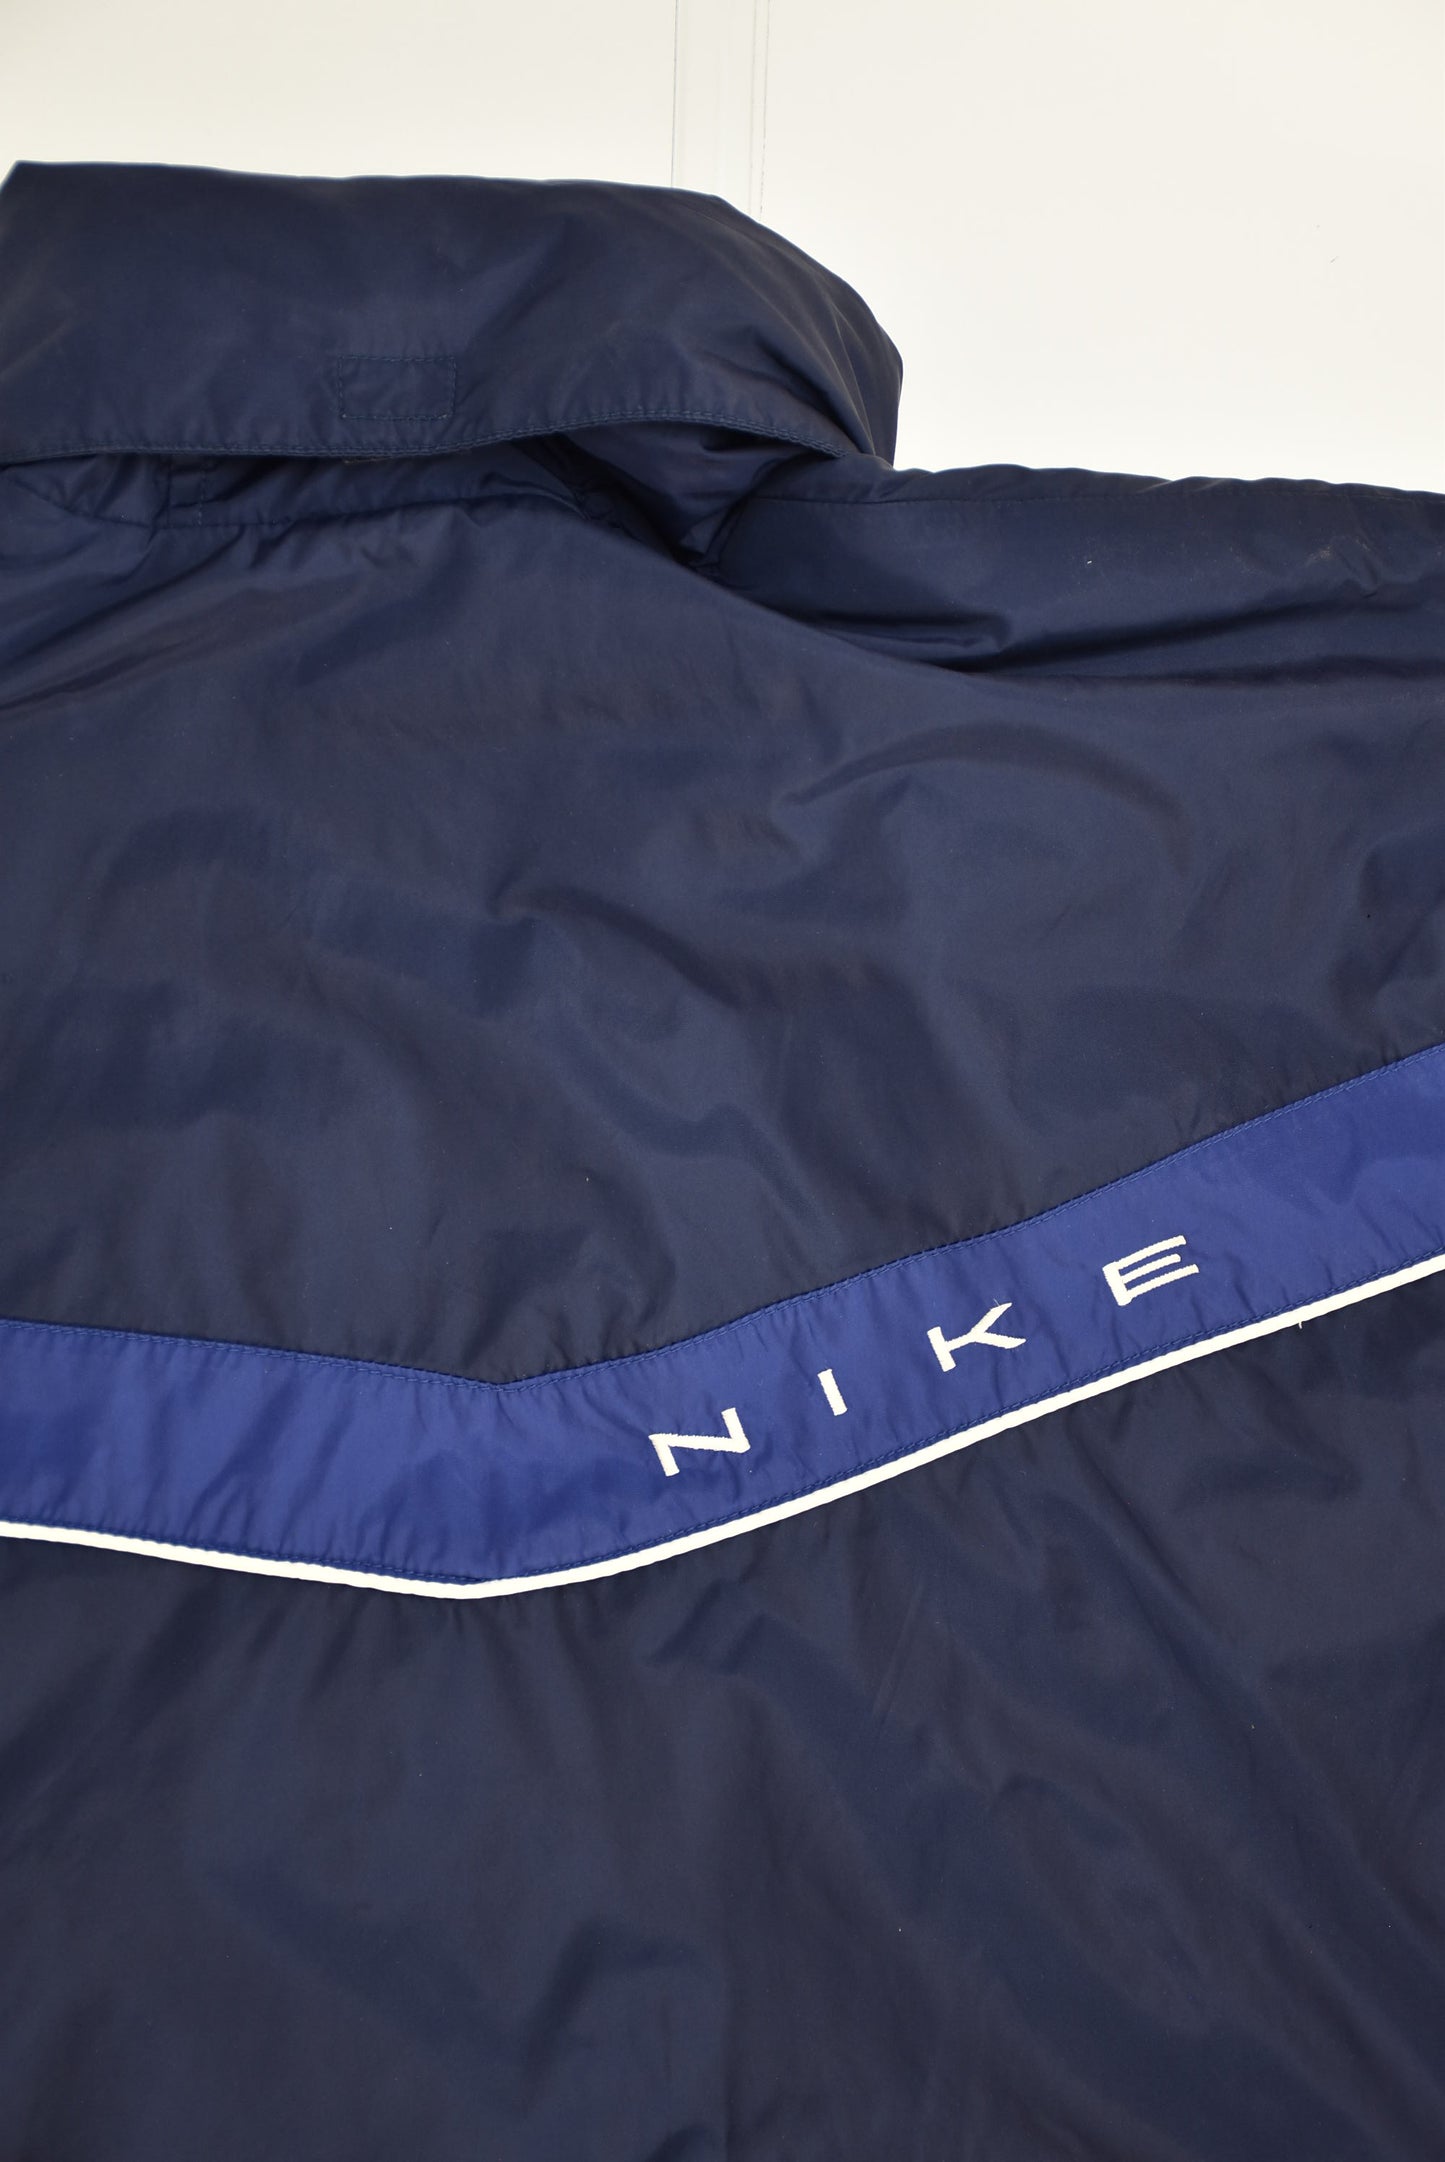 00s Nike Jacket (L)